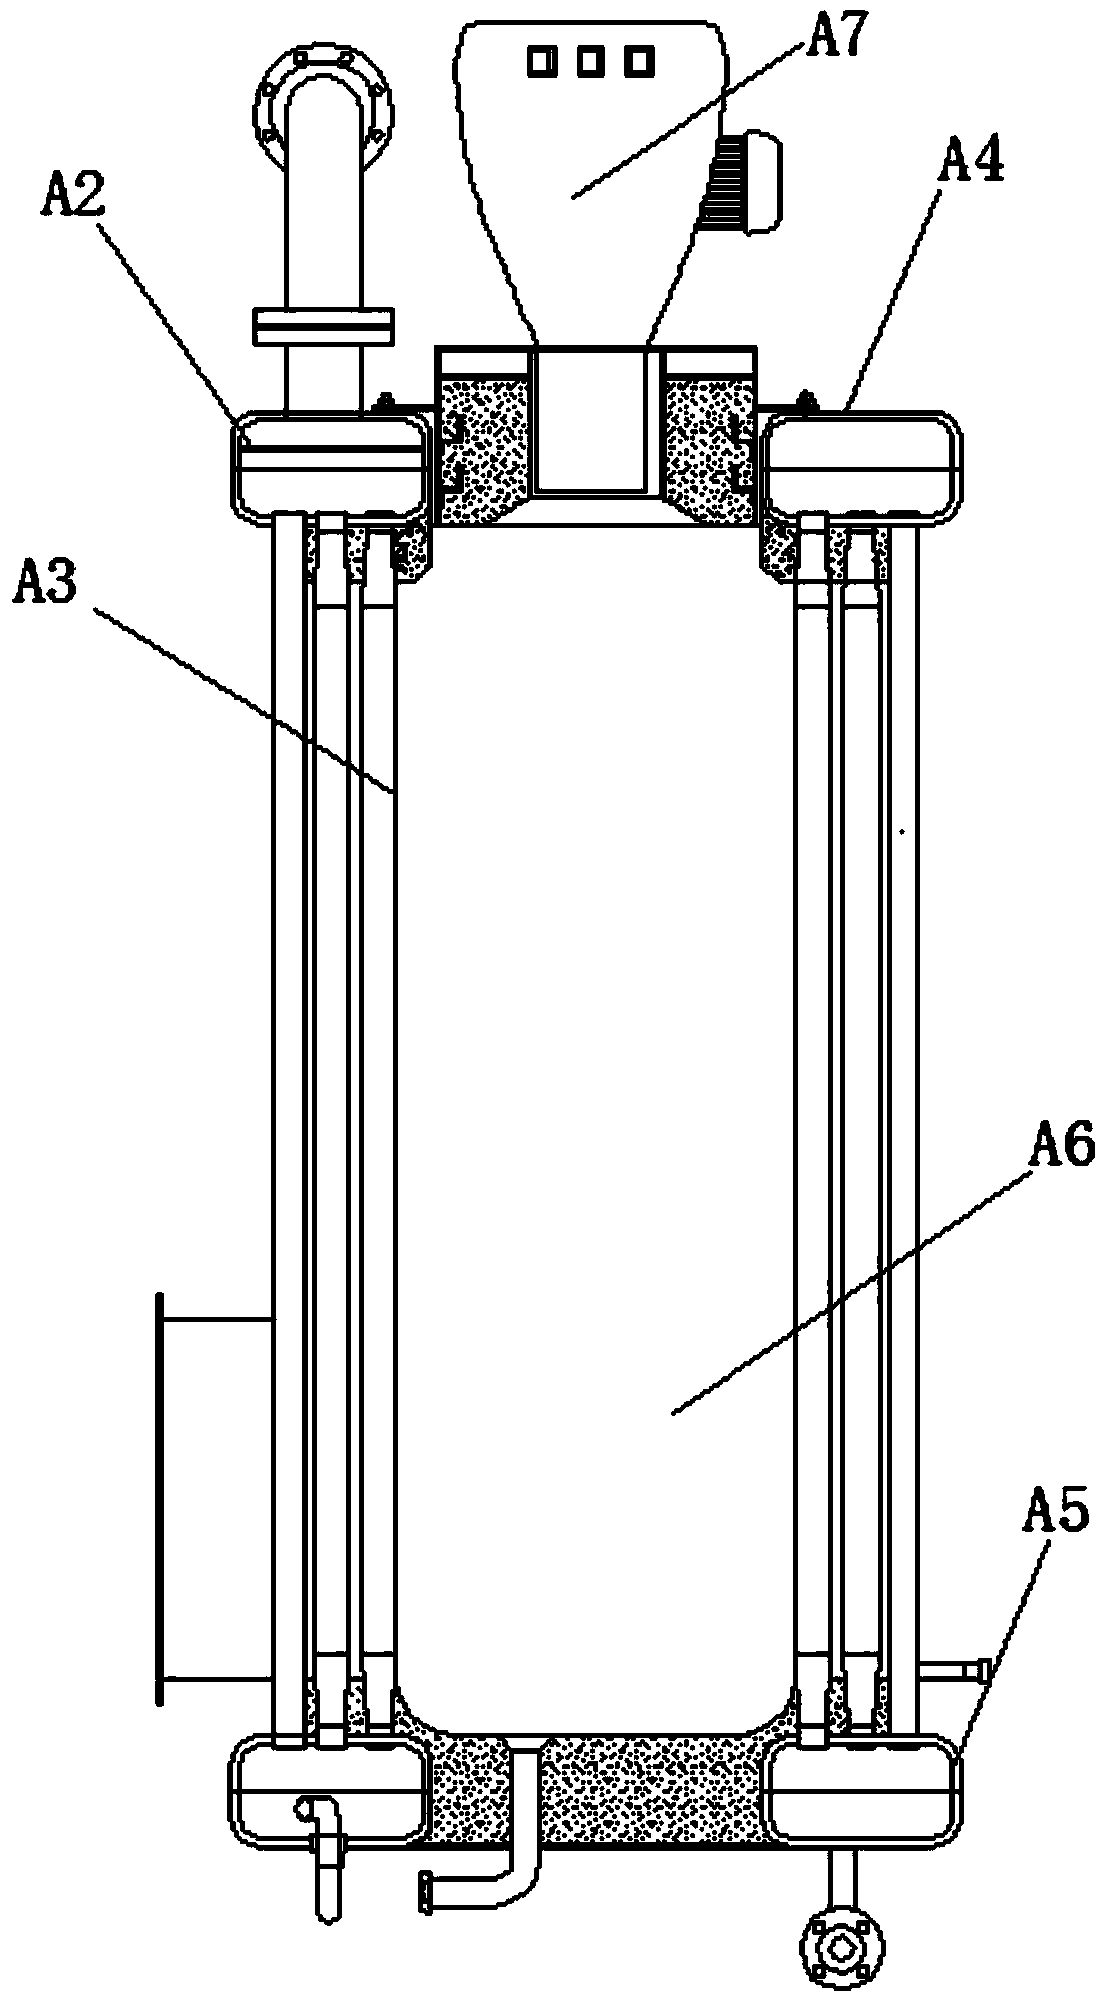 Steam-water separation type fuel-gas vertical straight-flow steam boiler